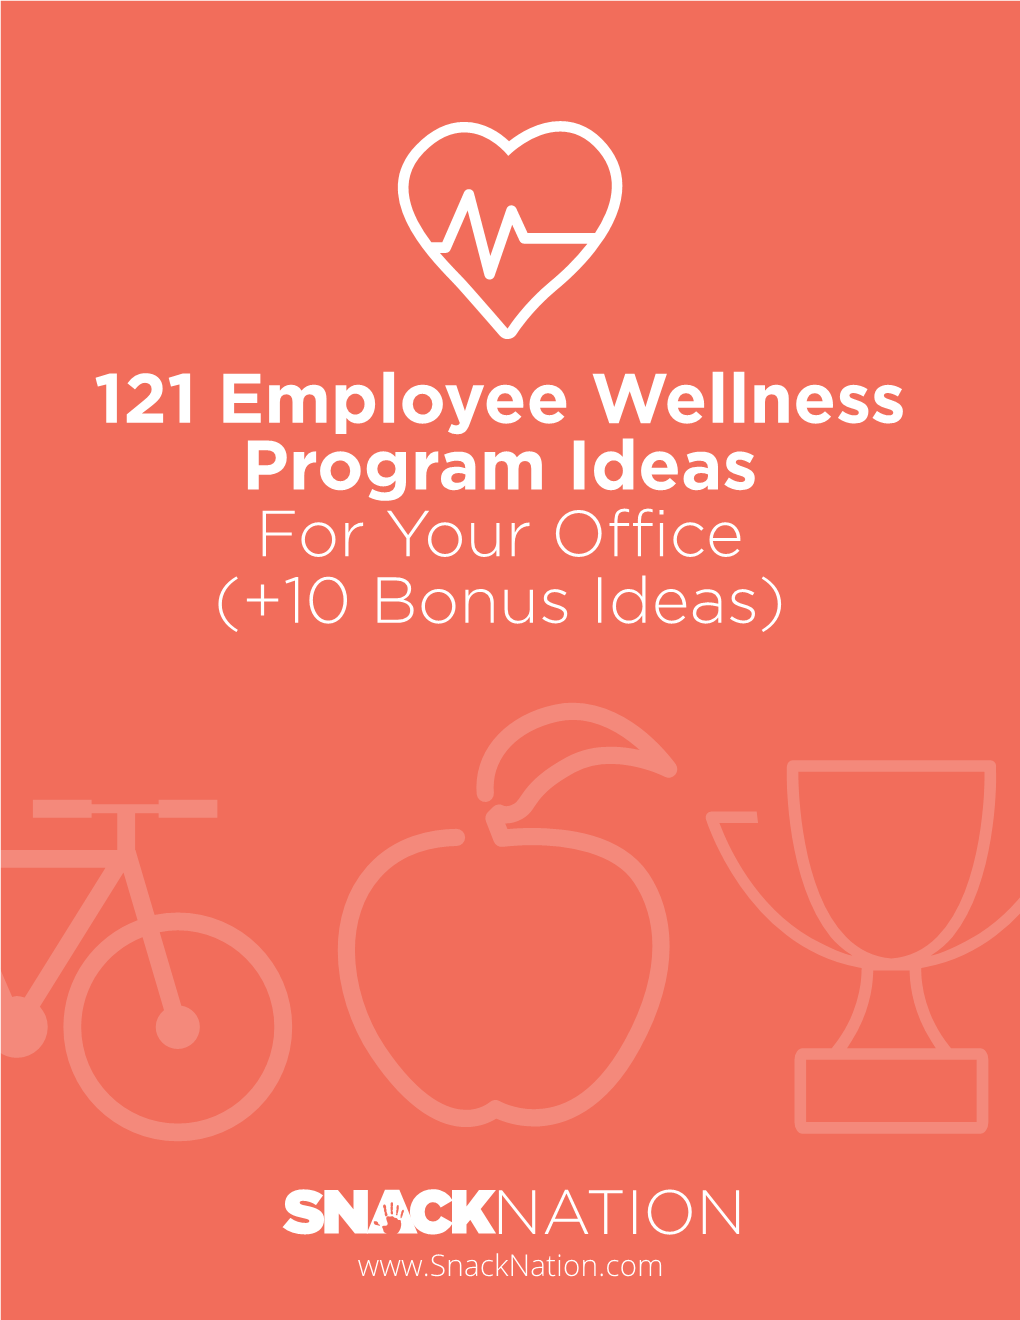 121 Employee Wellness Program Ideas for Your Office (+10 Bonus Ideas)